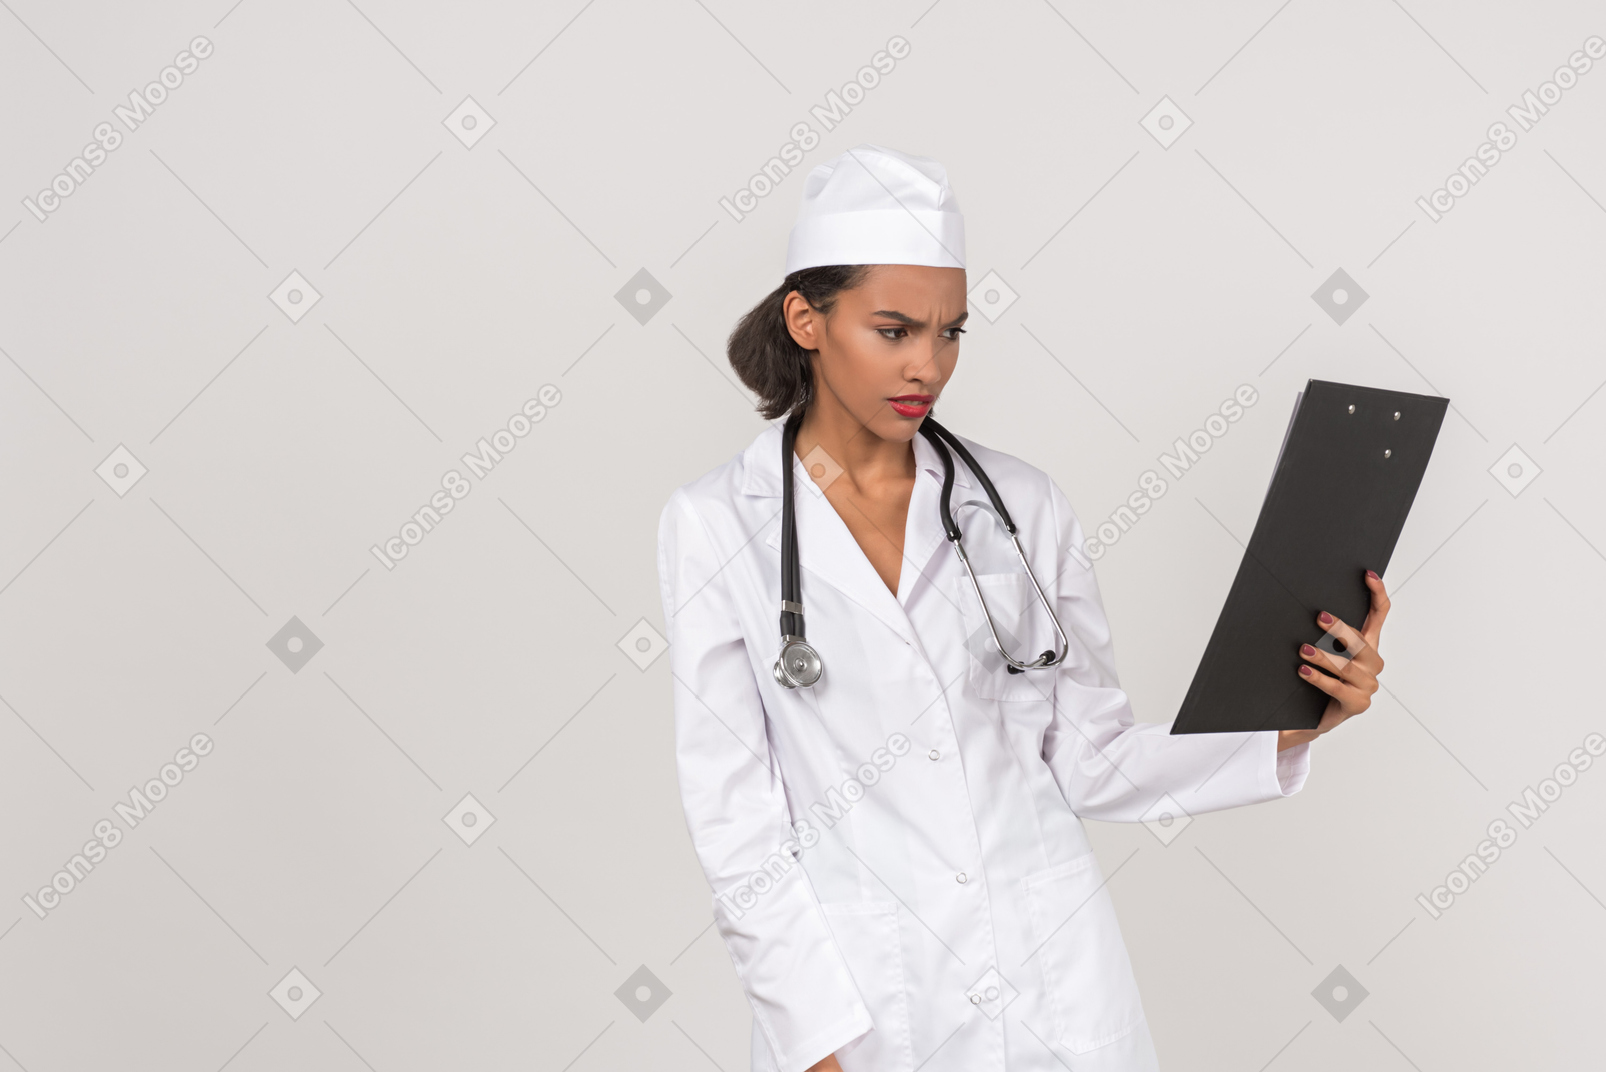 Attractive female doctor looking worried